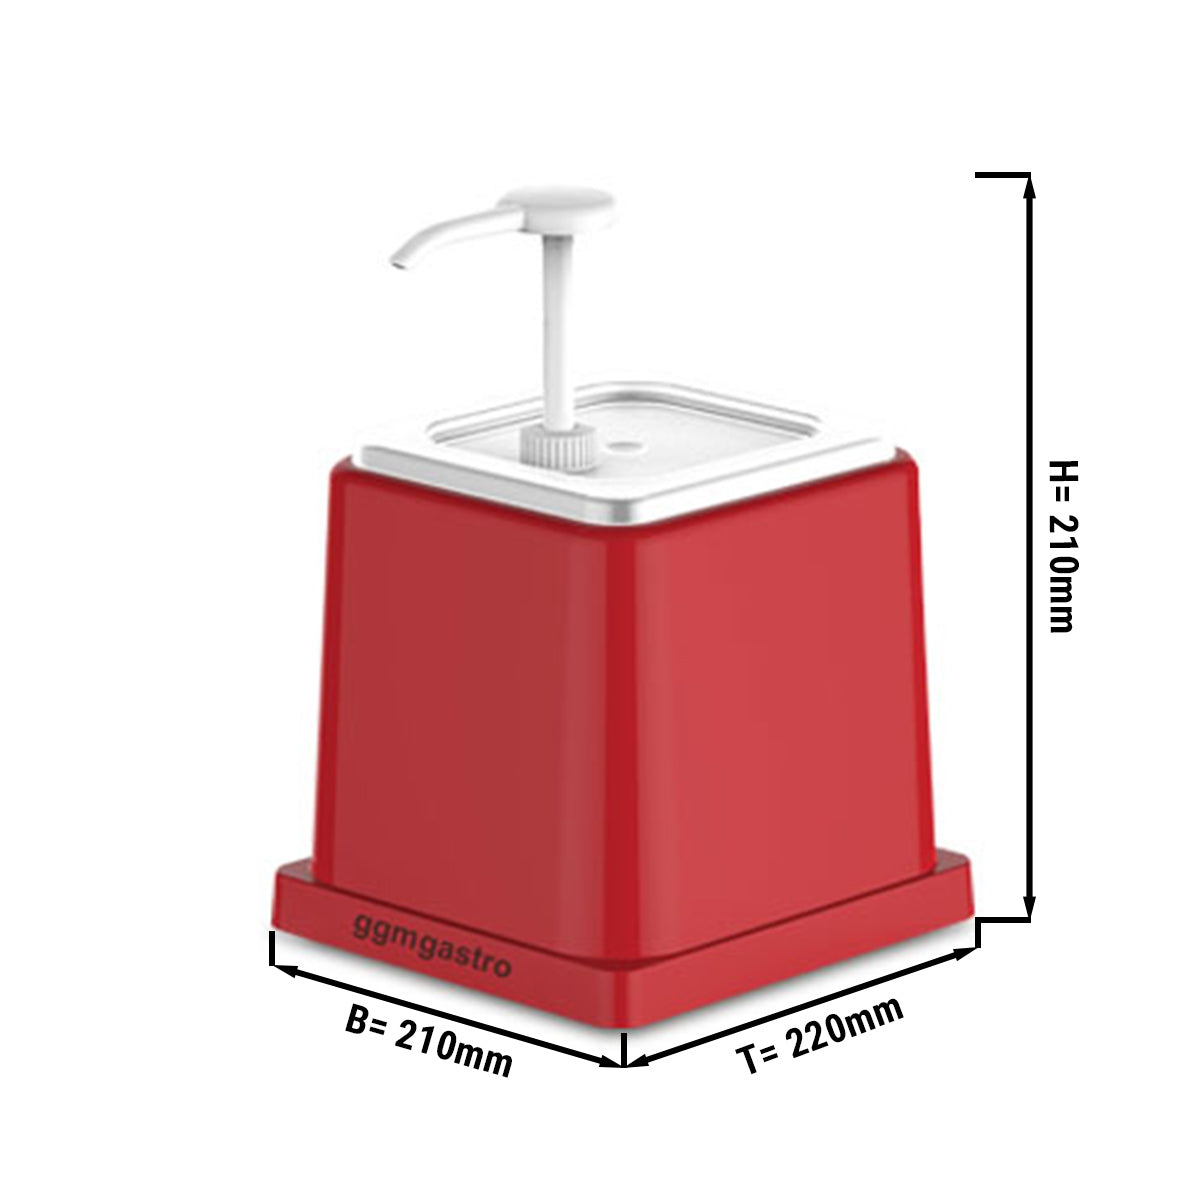 Ketchup dispenser - 2 liter